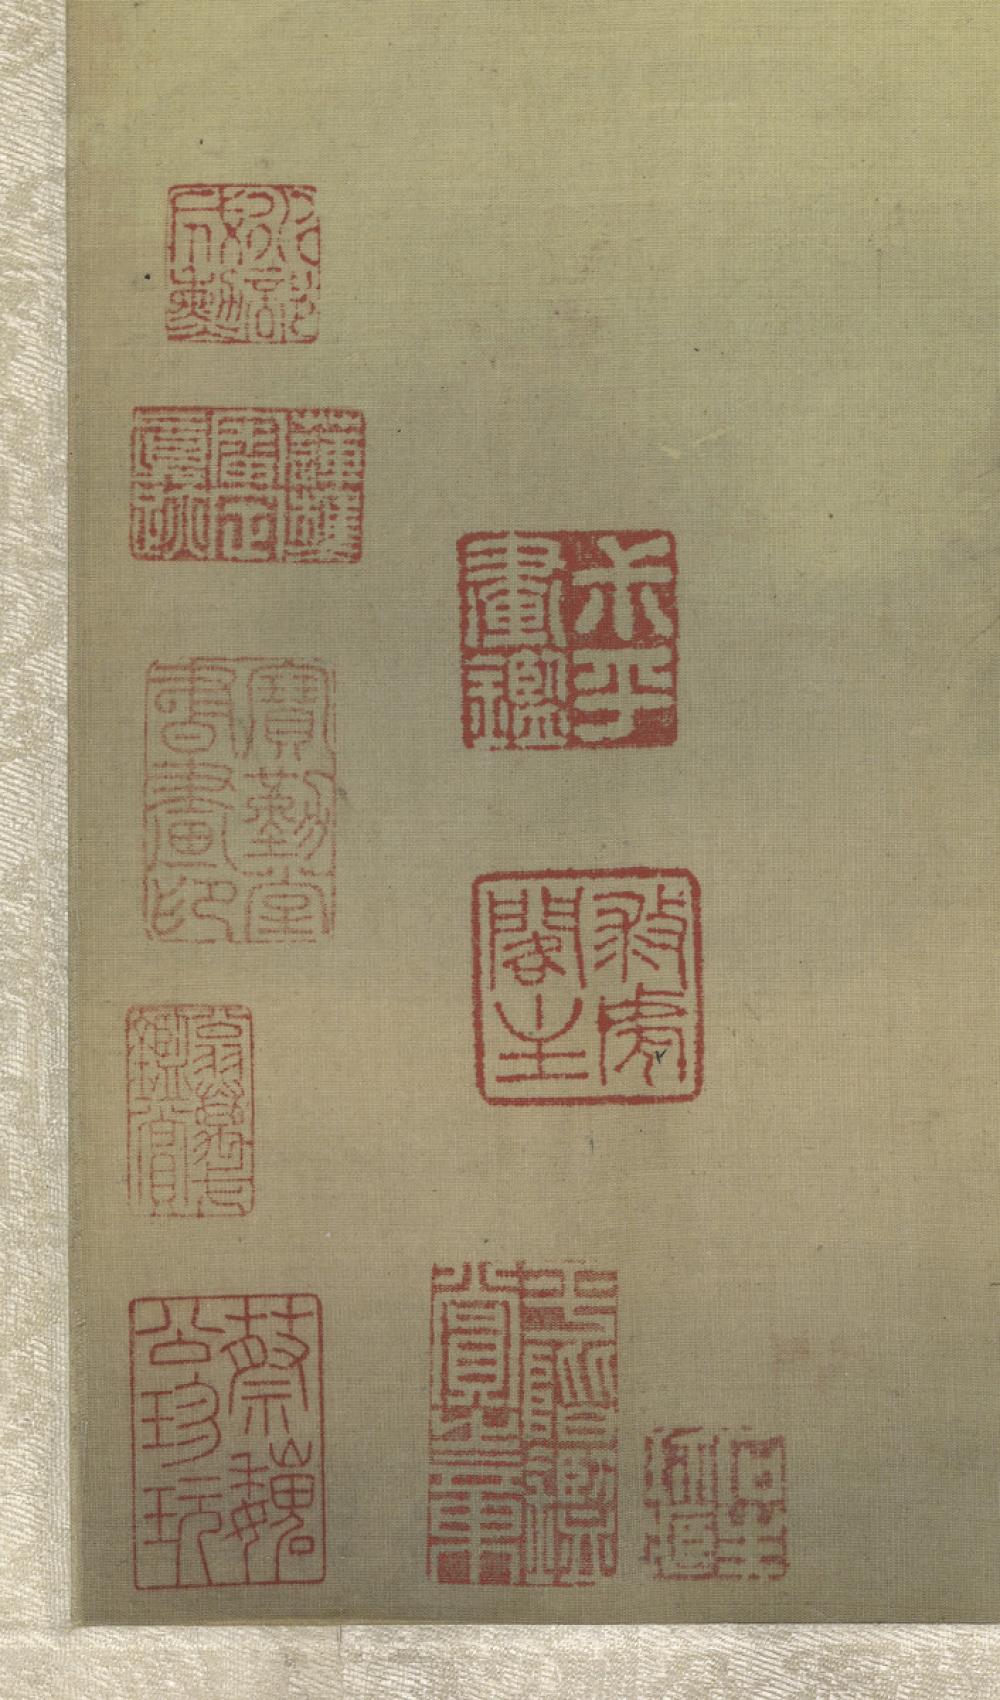 Wang Hui, Spring Dawn at Yanji [Rock of Swallows], ca. 1695 (Qing Dynasty)